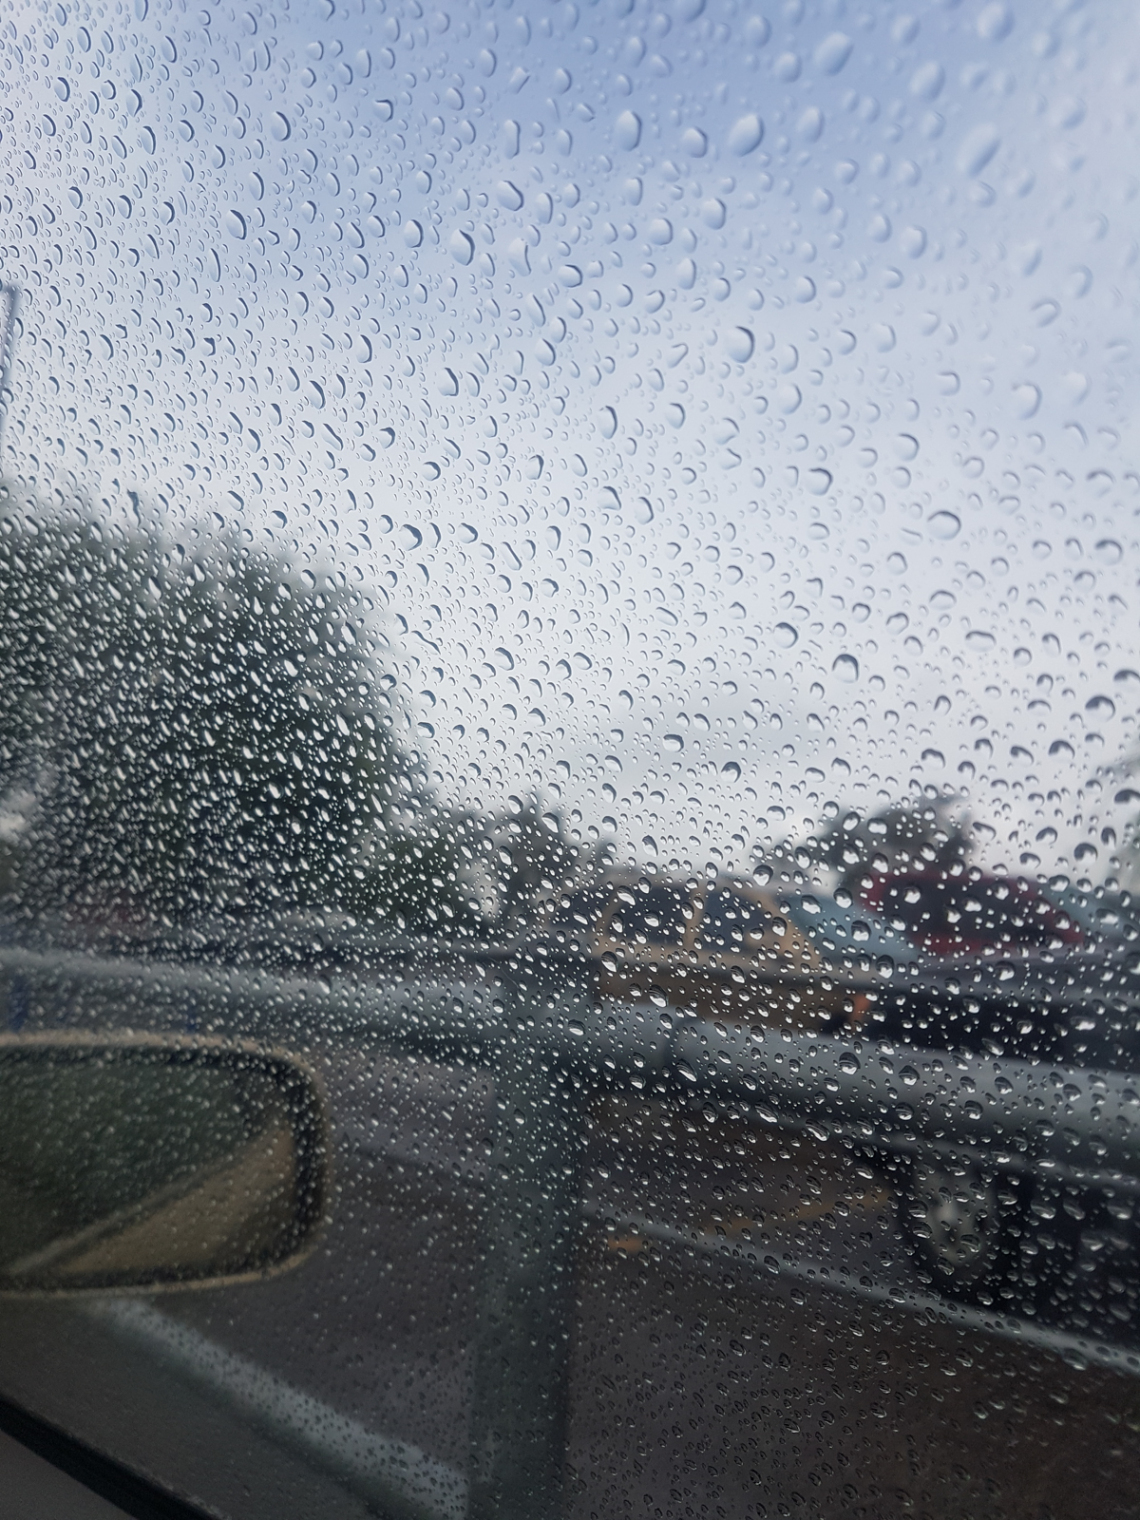 Ranjbar Fatemeha - Rainy day in Tucson